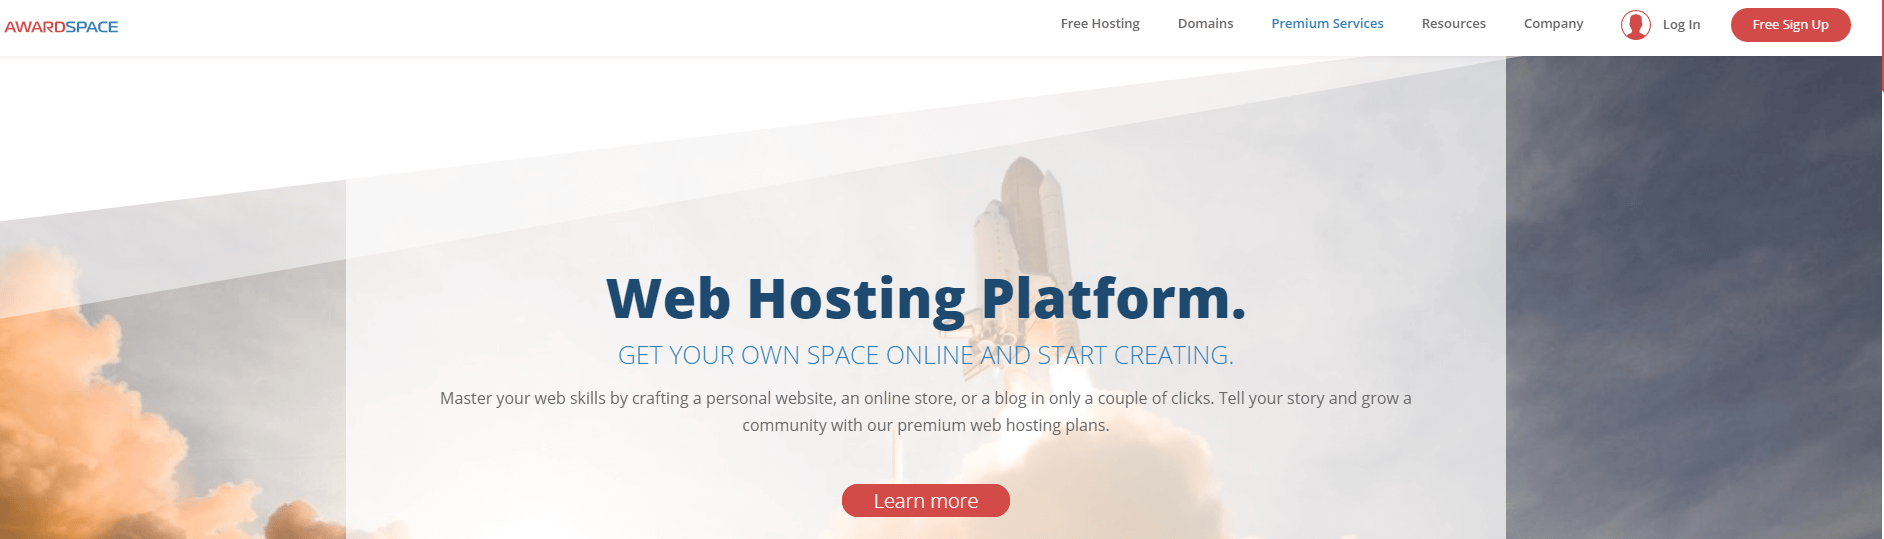 Plateforme d'hébergement Web AwardSpace.